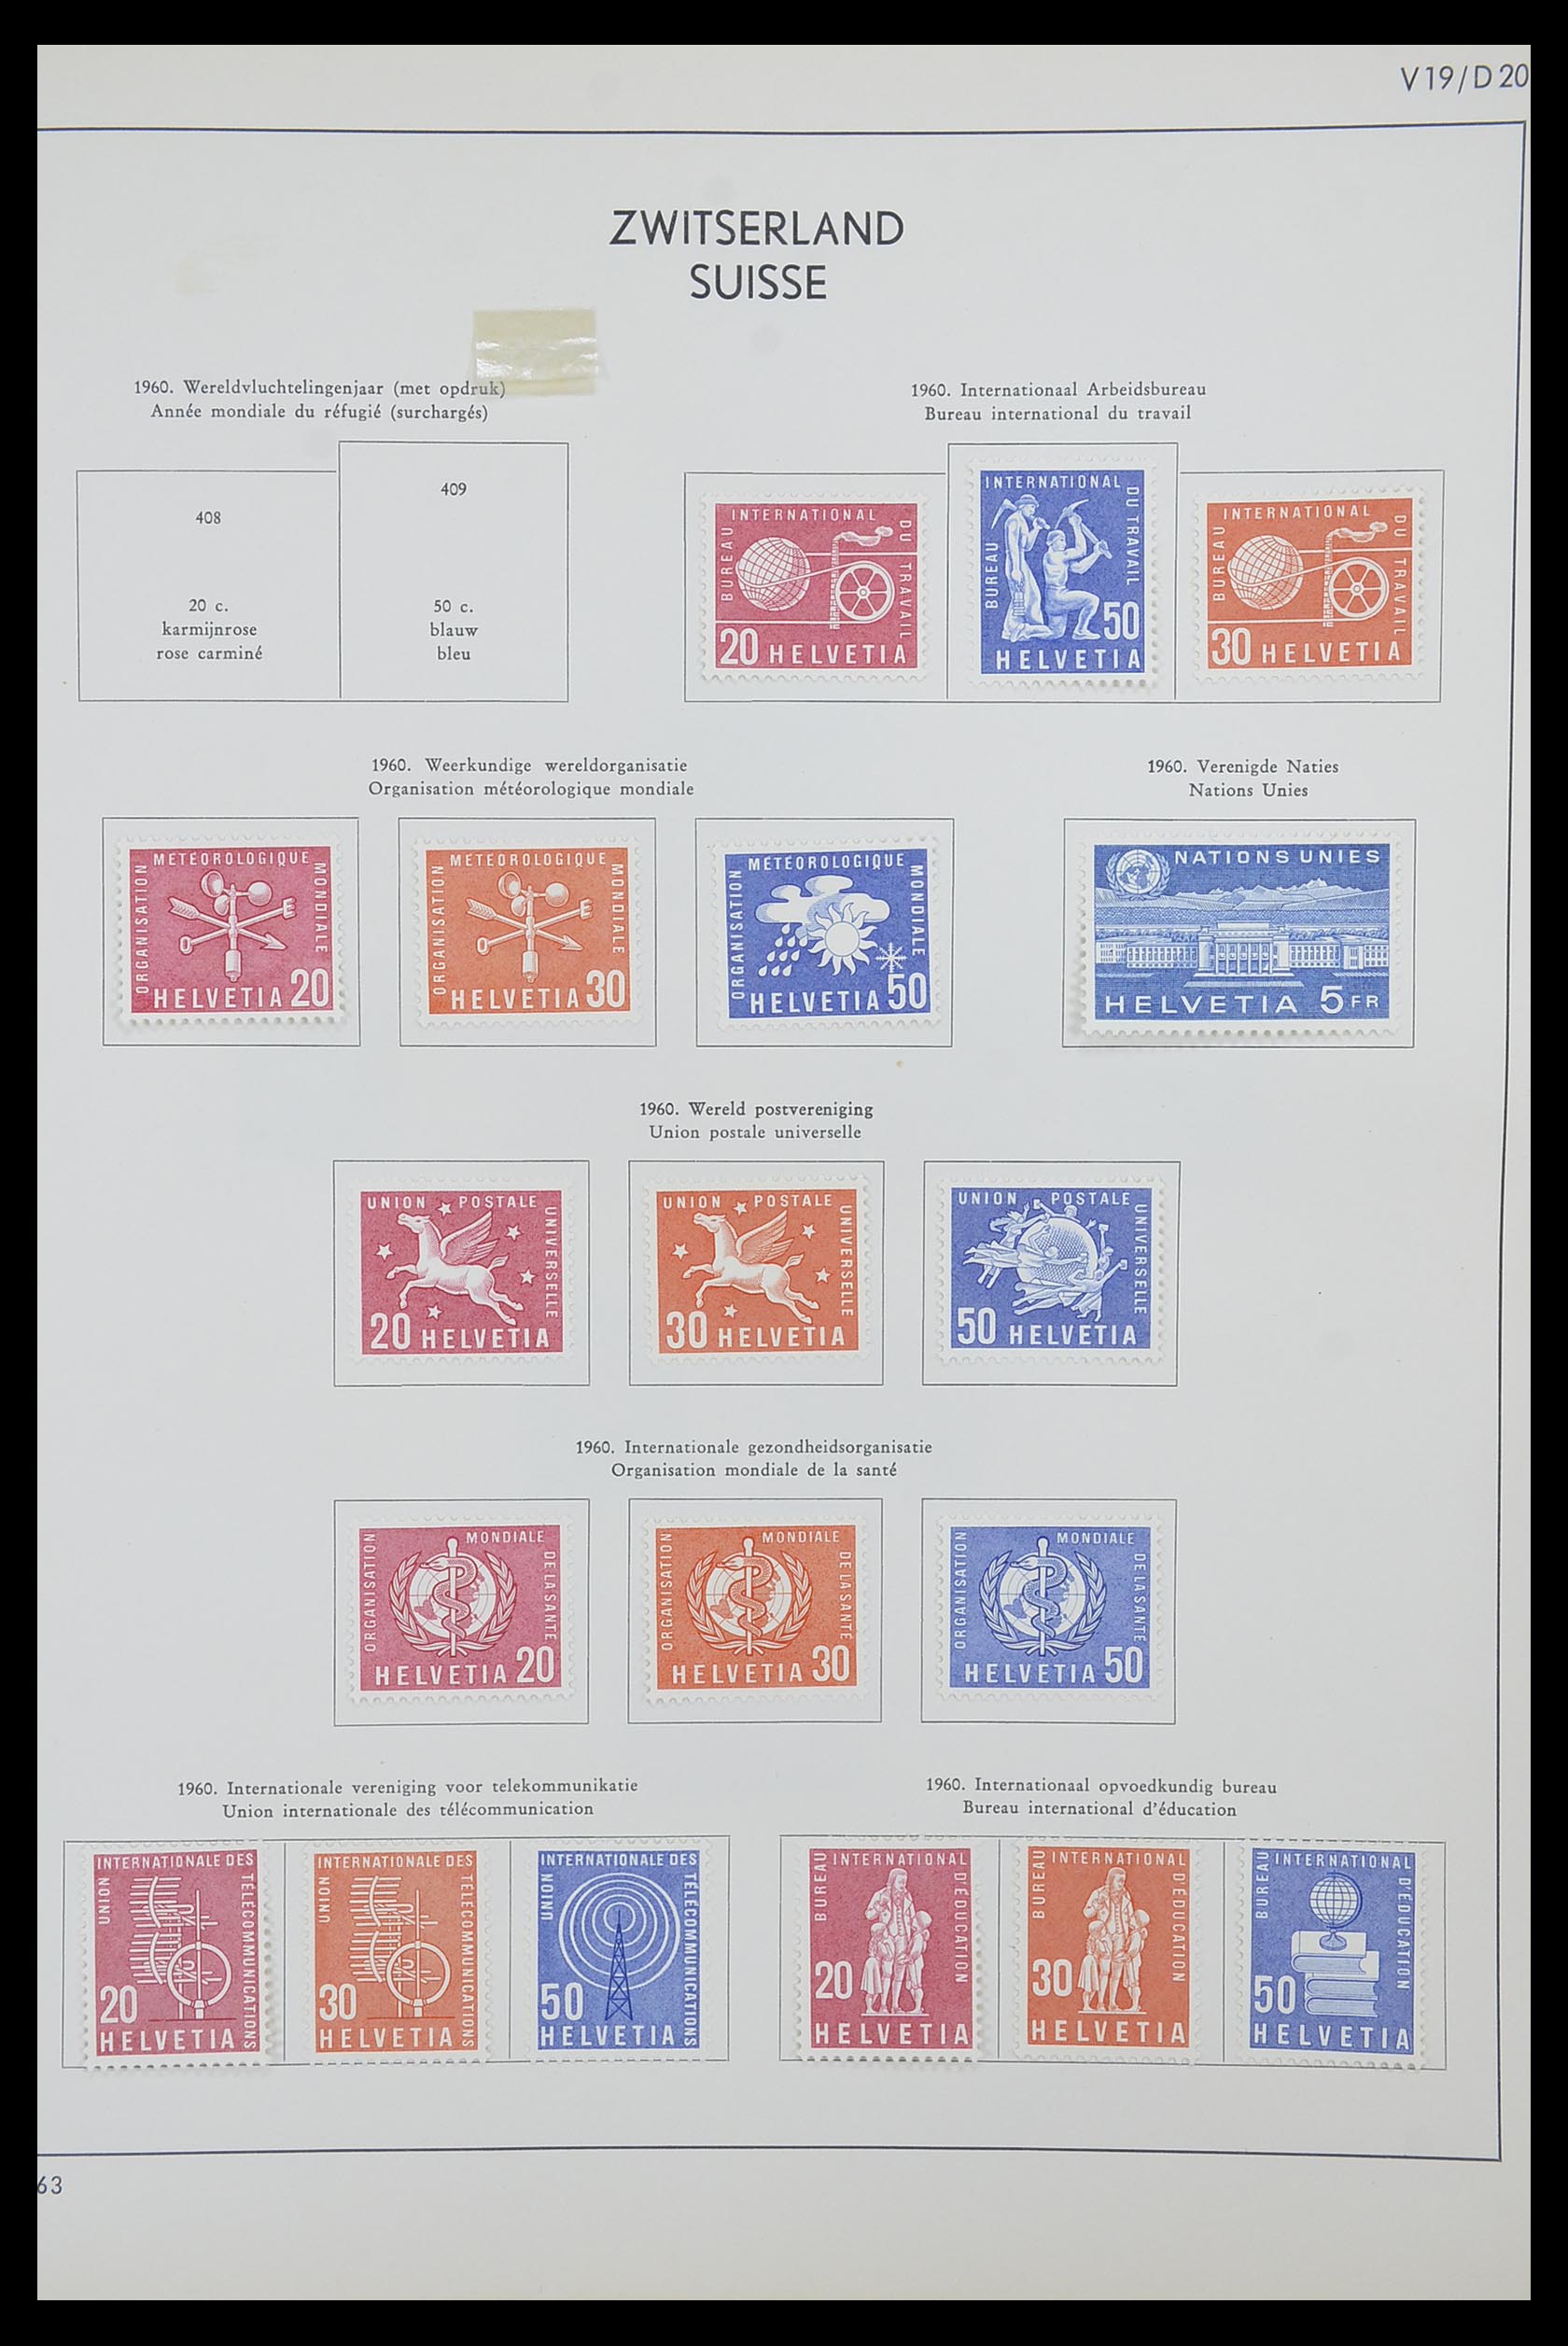 33601 119 - Stamp collection 33601 Switzerland 1854-1985.